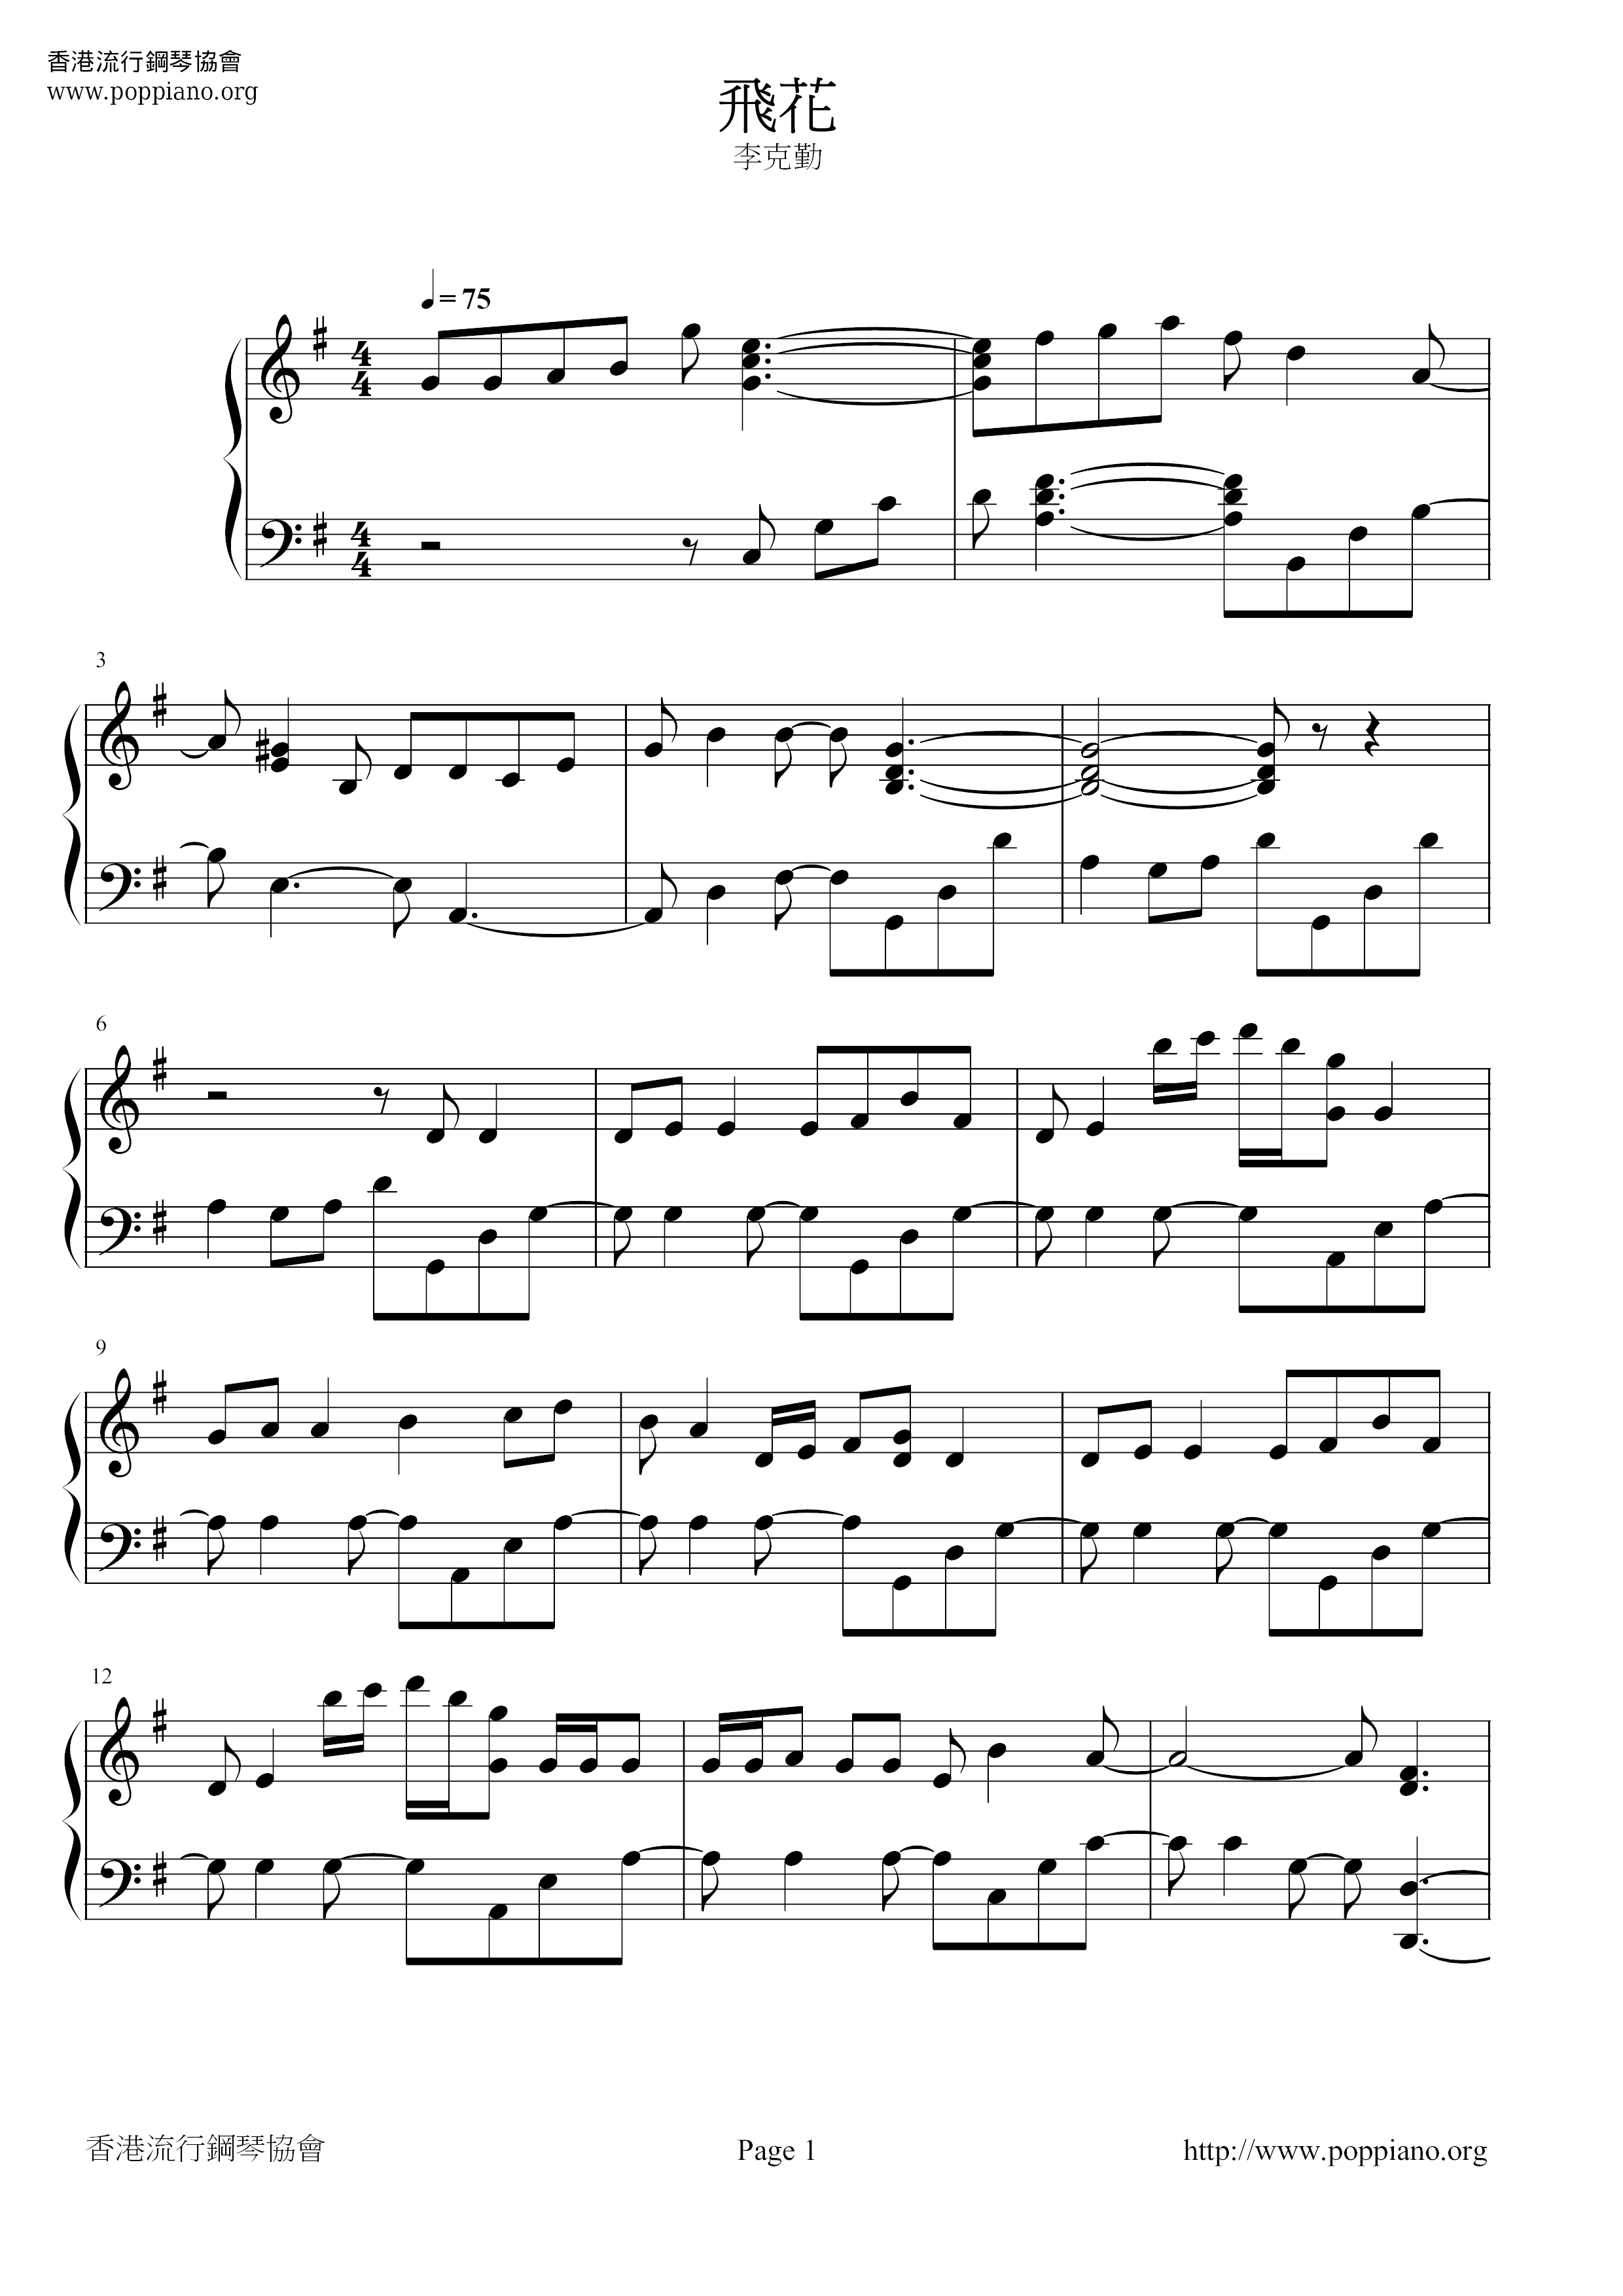 Feihua Score